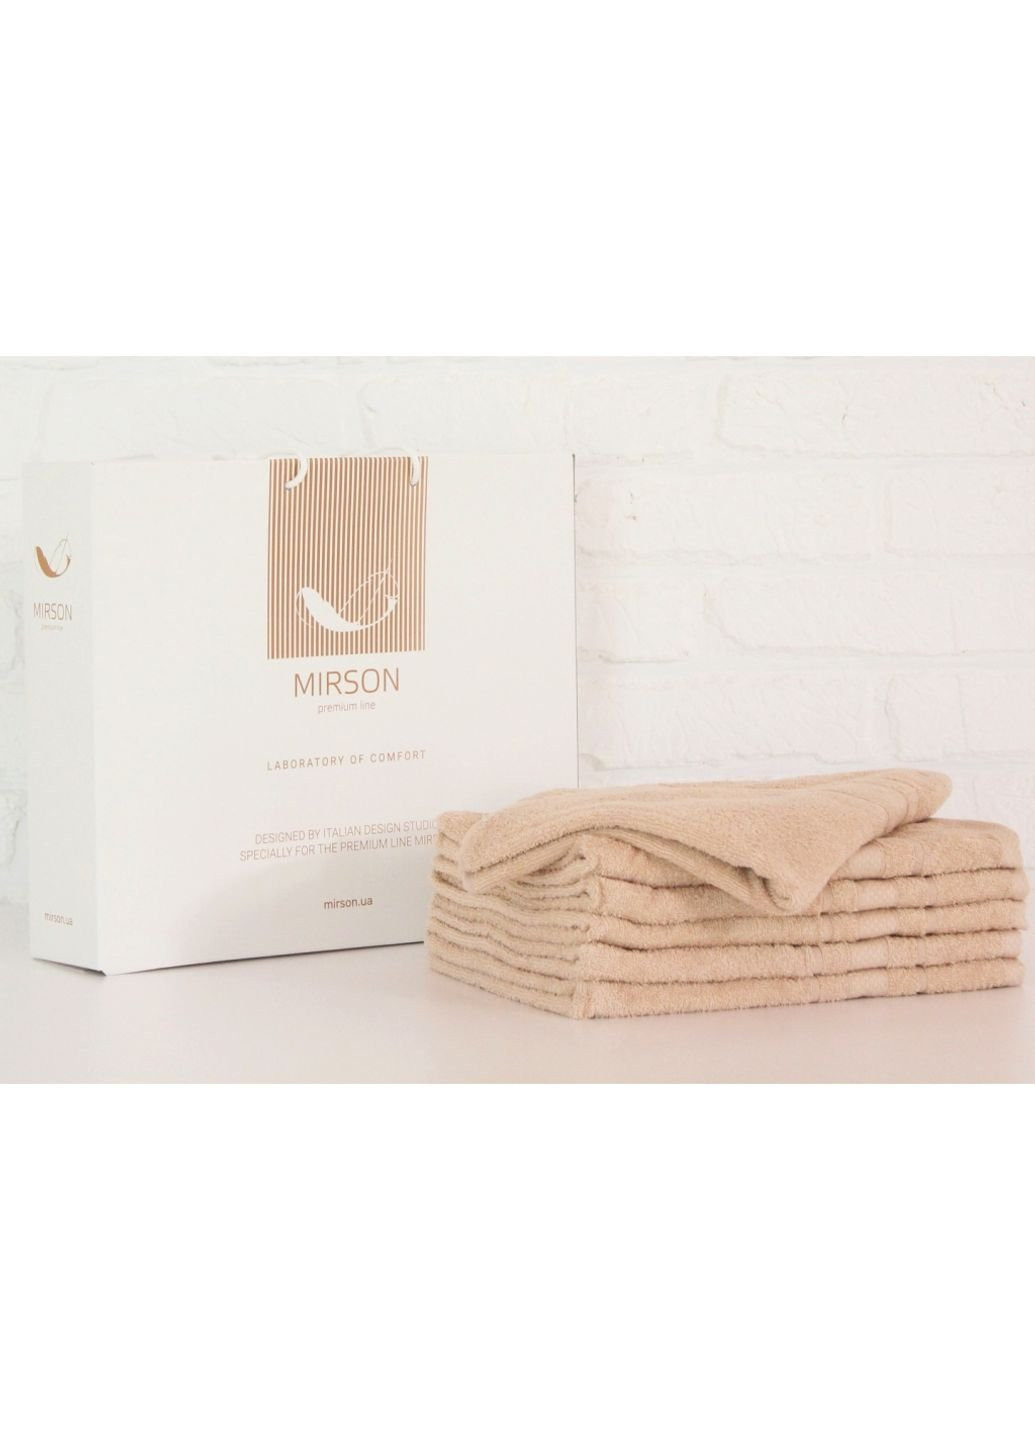 Mirson полотенце набор банных №5084 elite softness beige 50х90 6 шт (2200003524086) бежевый производство - Украина